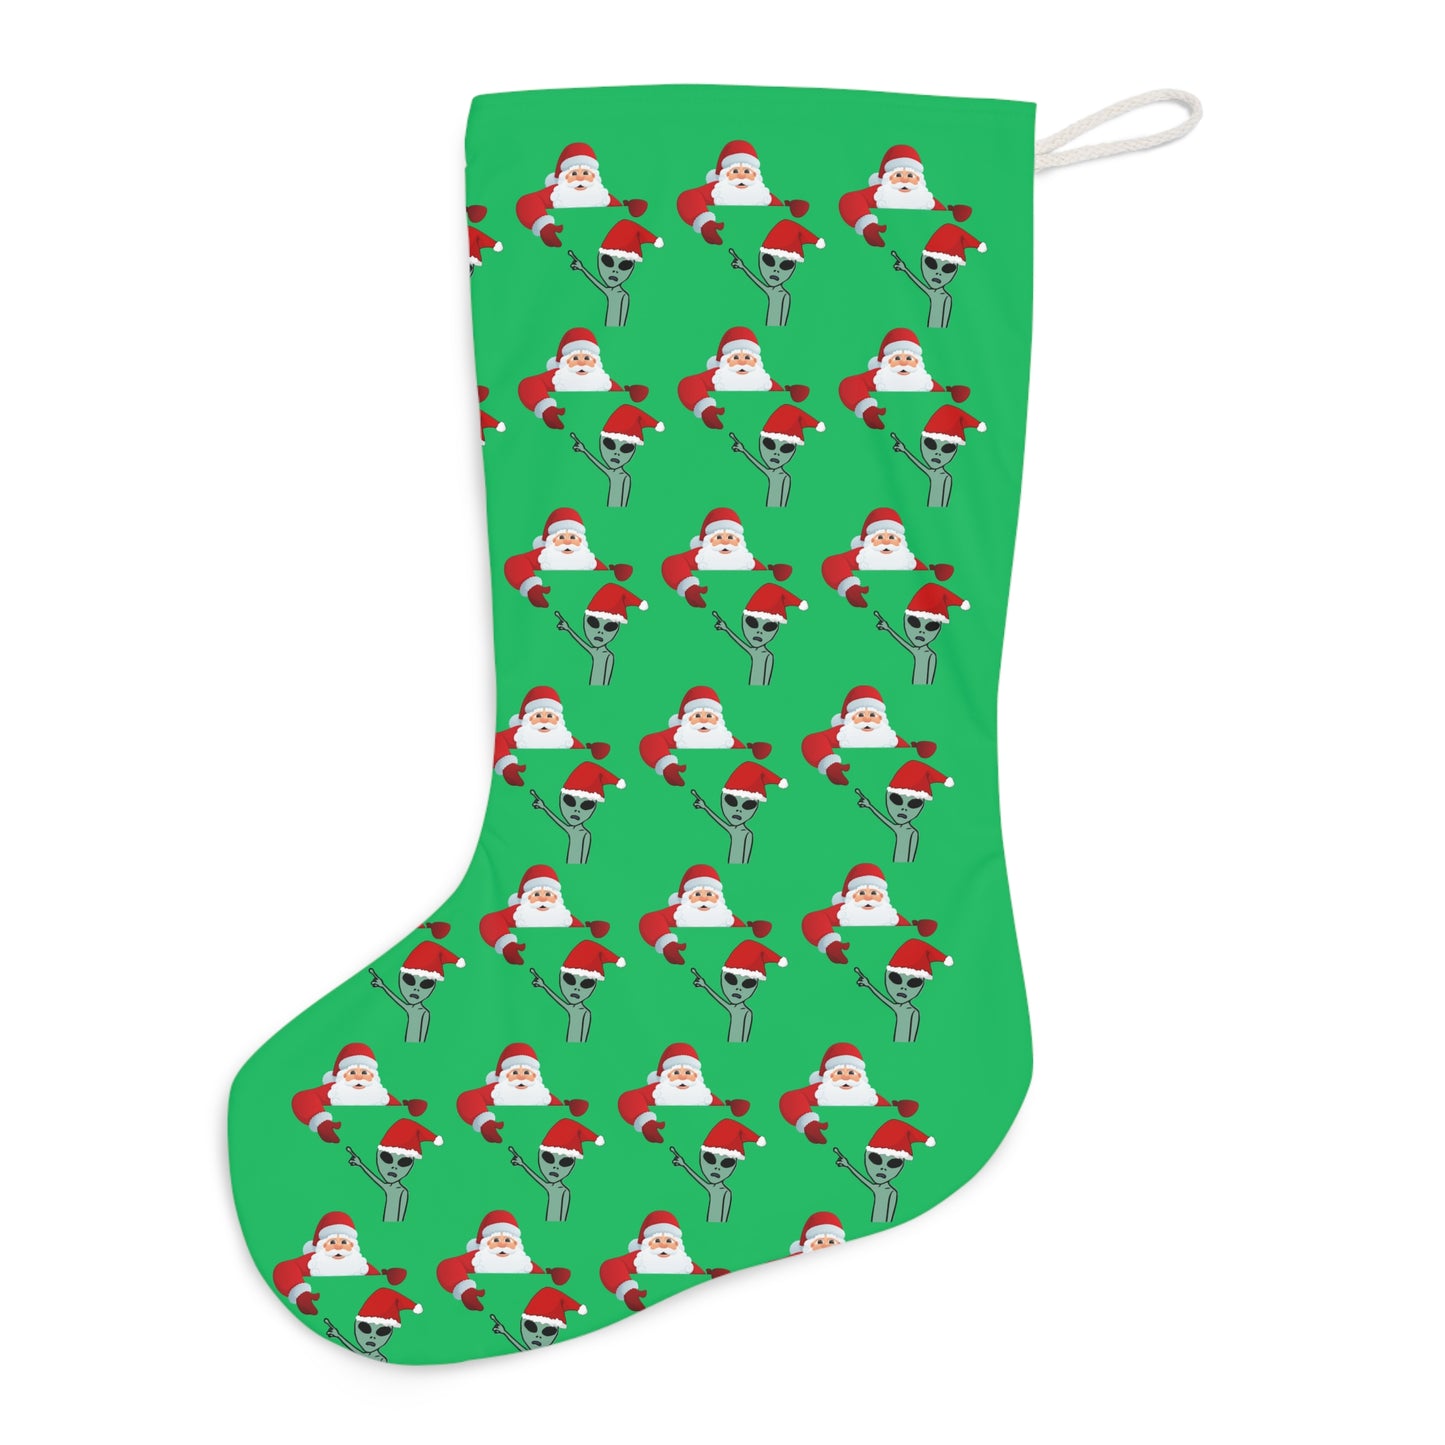 Santa Alien - Christmas UFO Fun Novelty Holiday Stocking